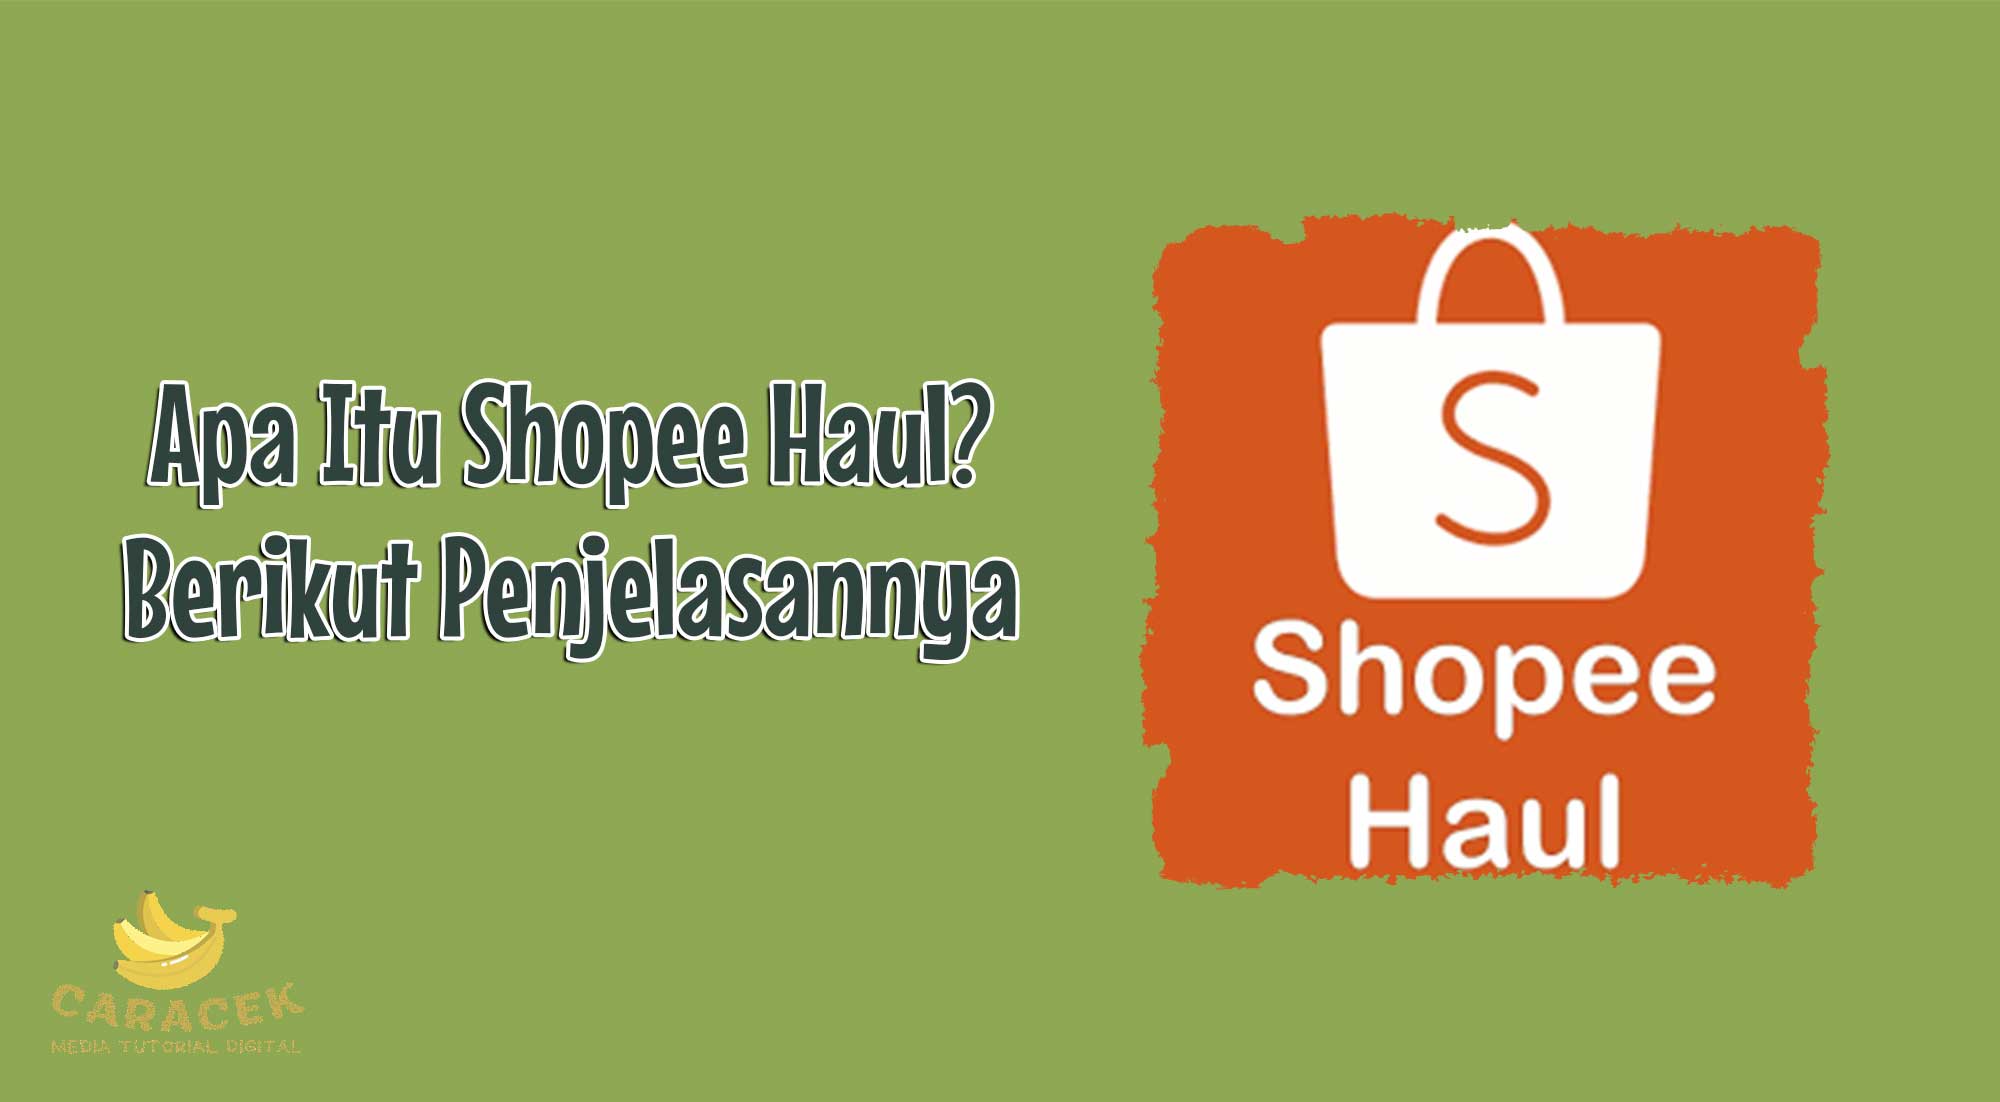 Shopee-Haul